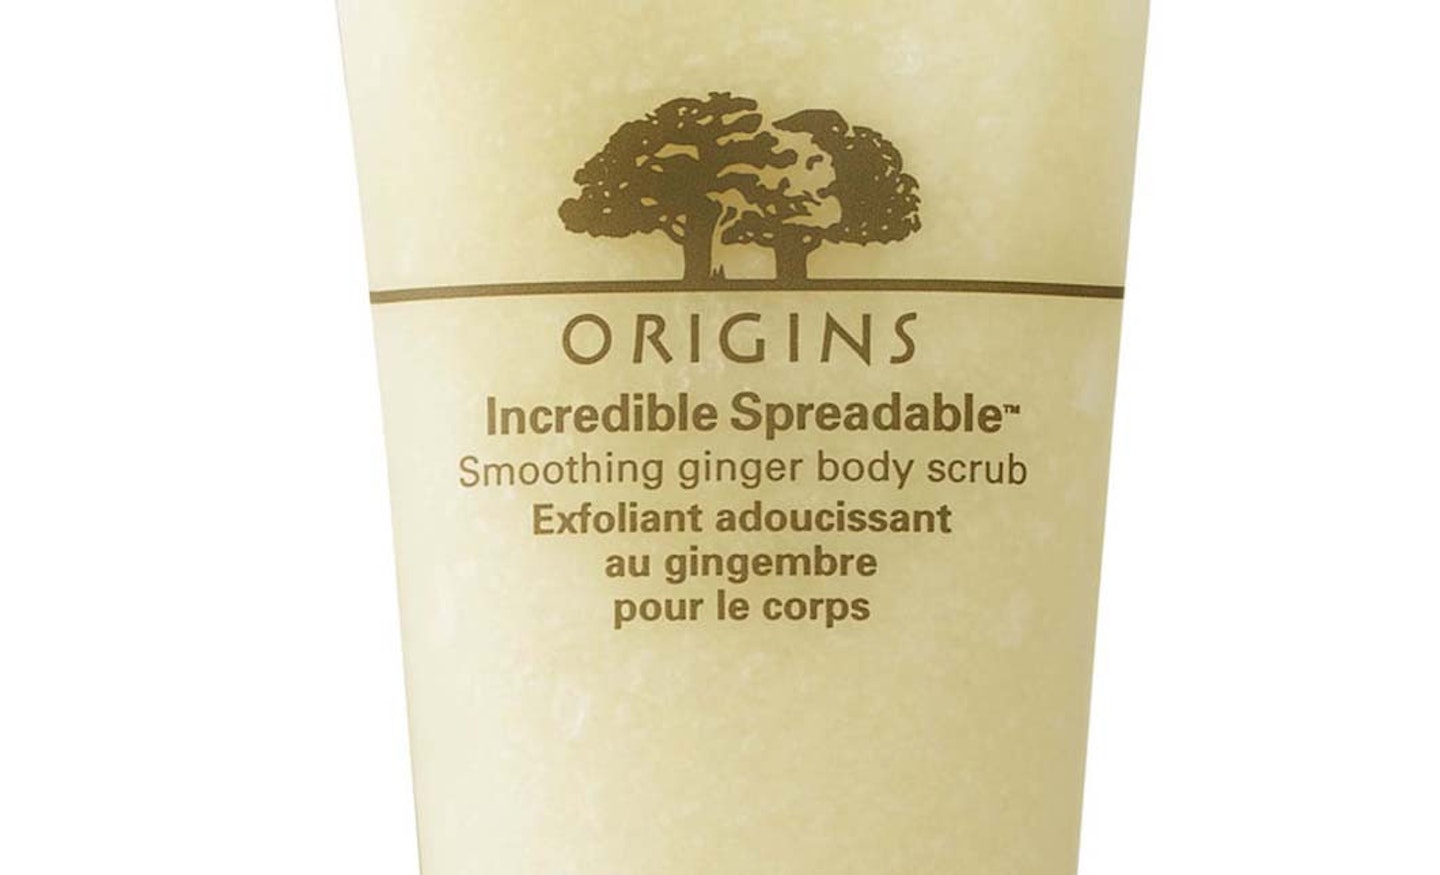 6. Origins Incredible Spreadable Scrub Ginger Body Smoother